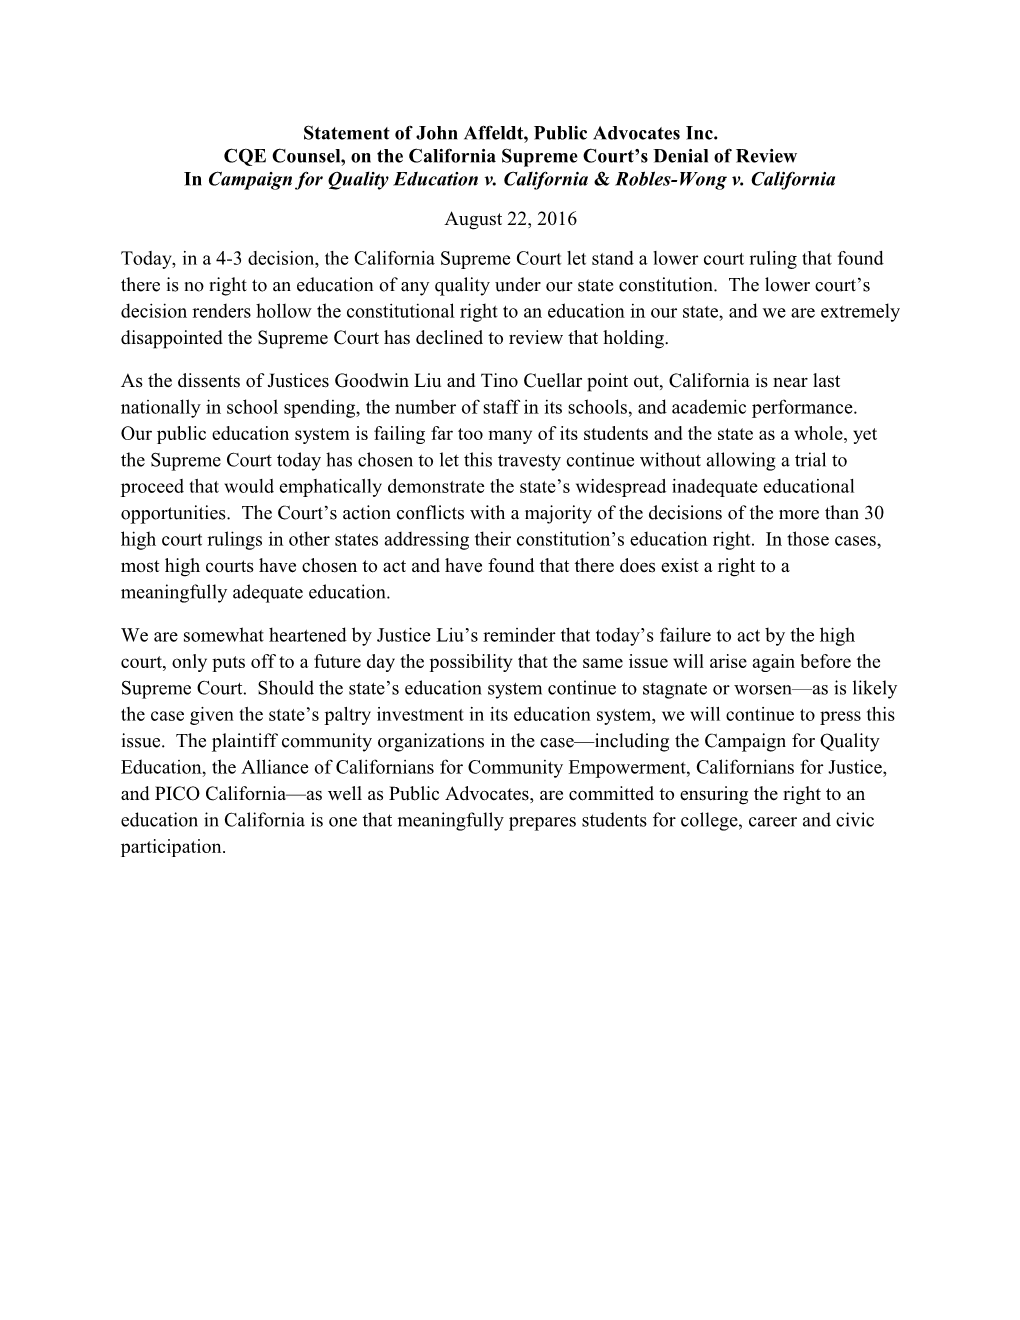 Statement of John Affeldt, Public Advocates Inc. CQE Counsel, on the California Supreme